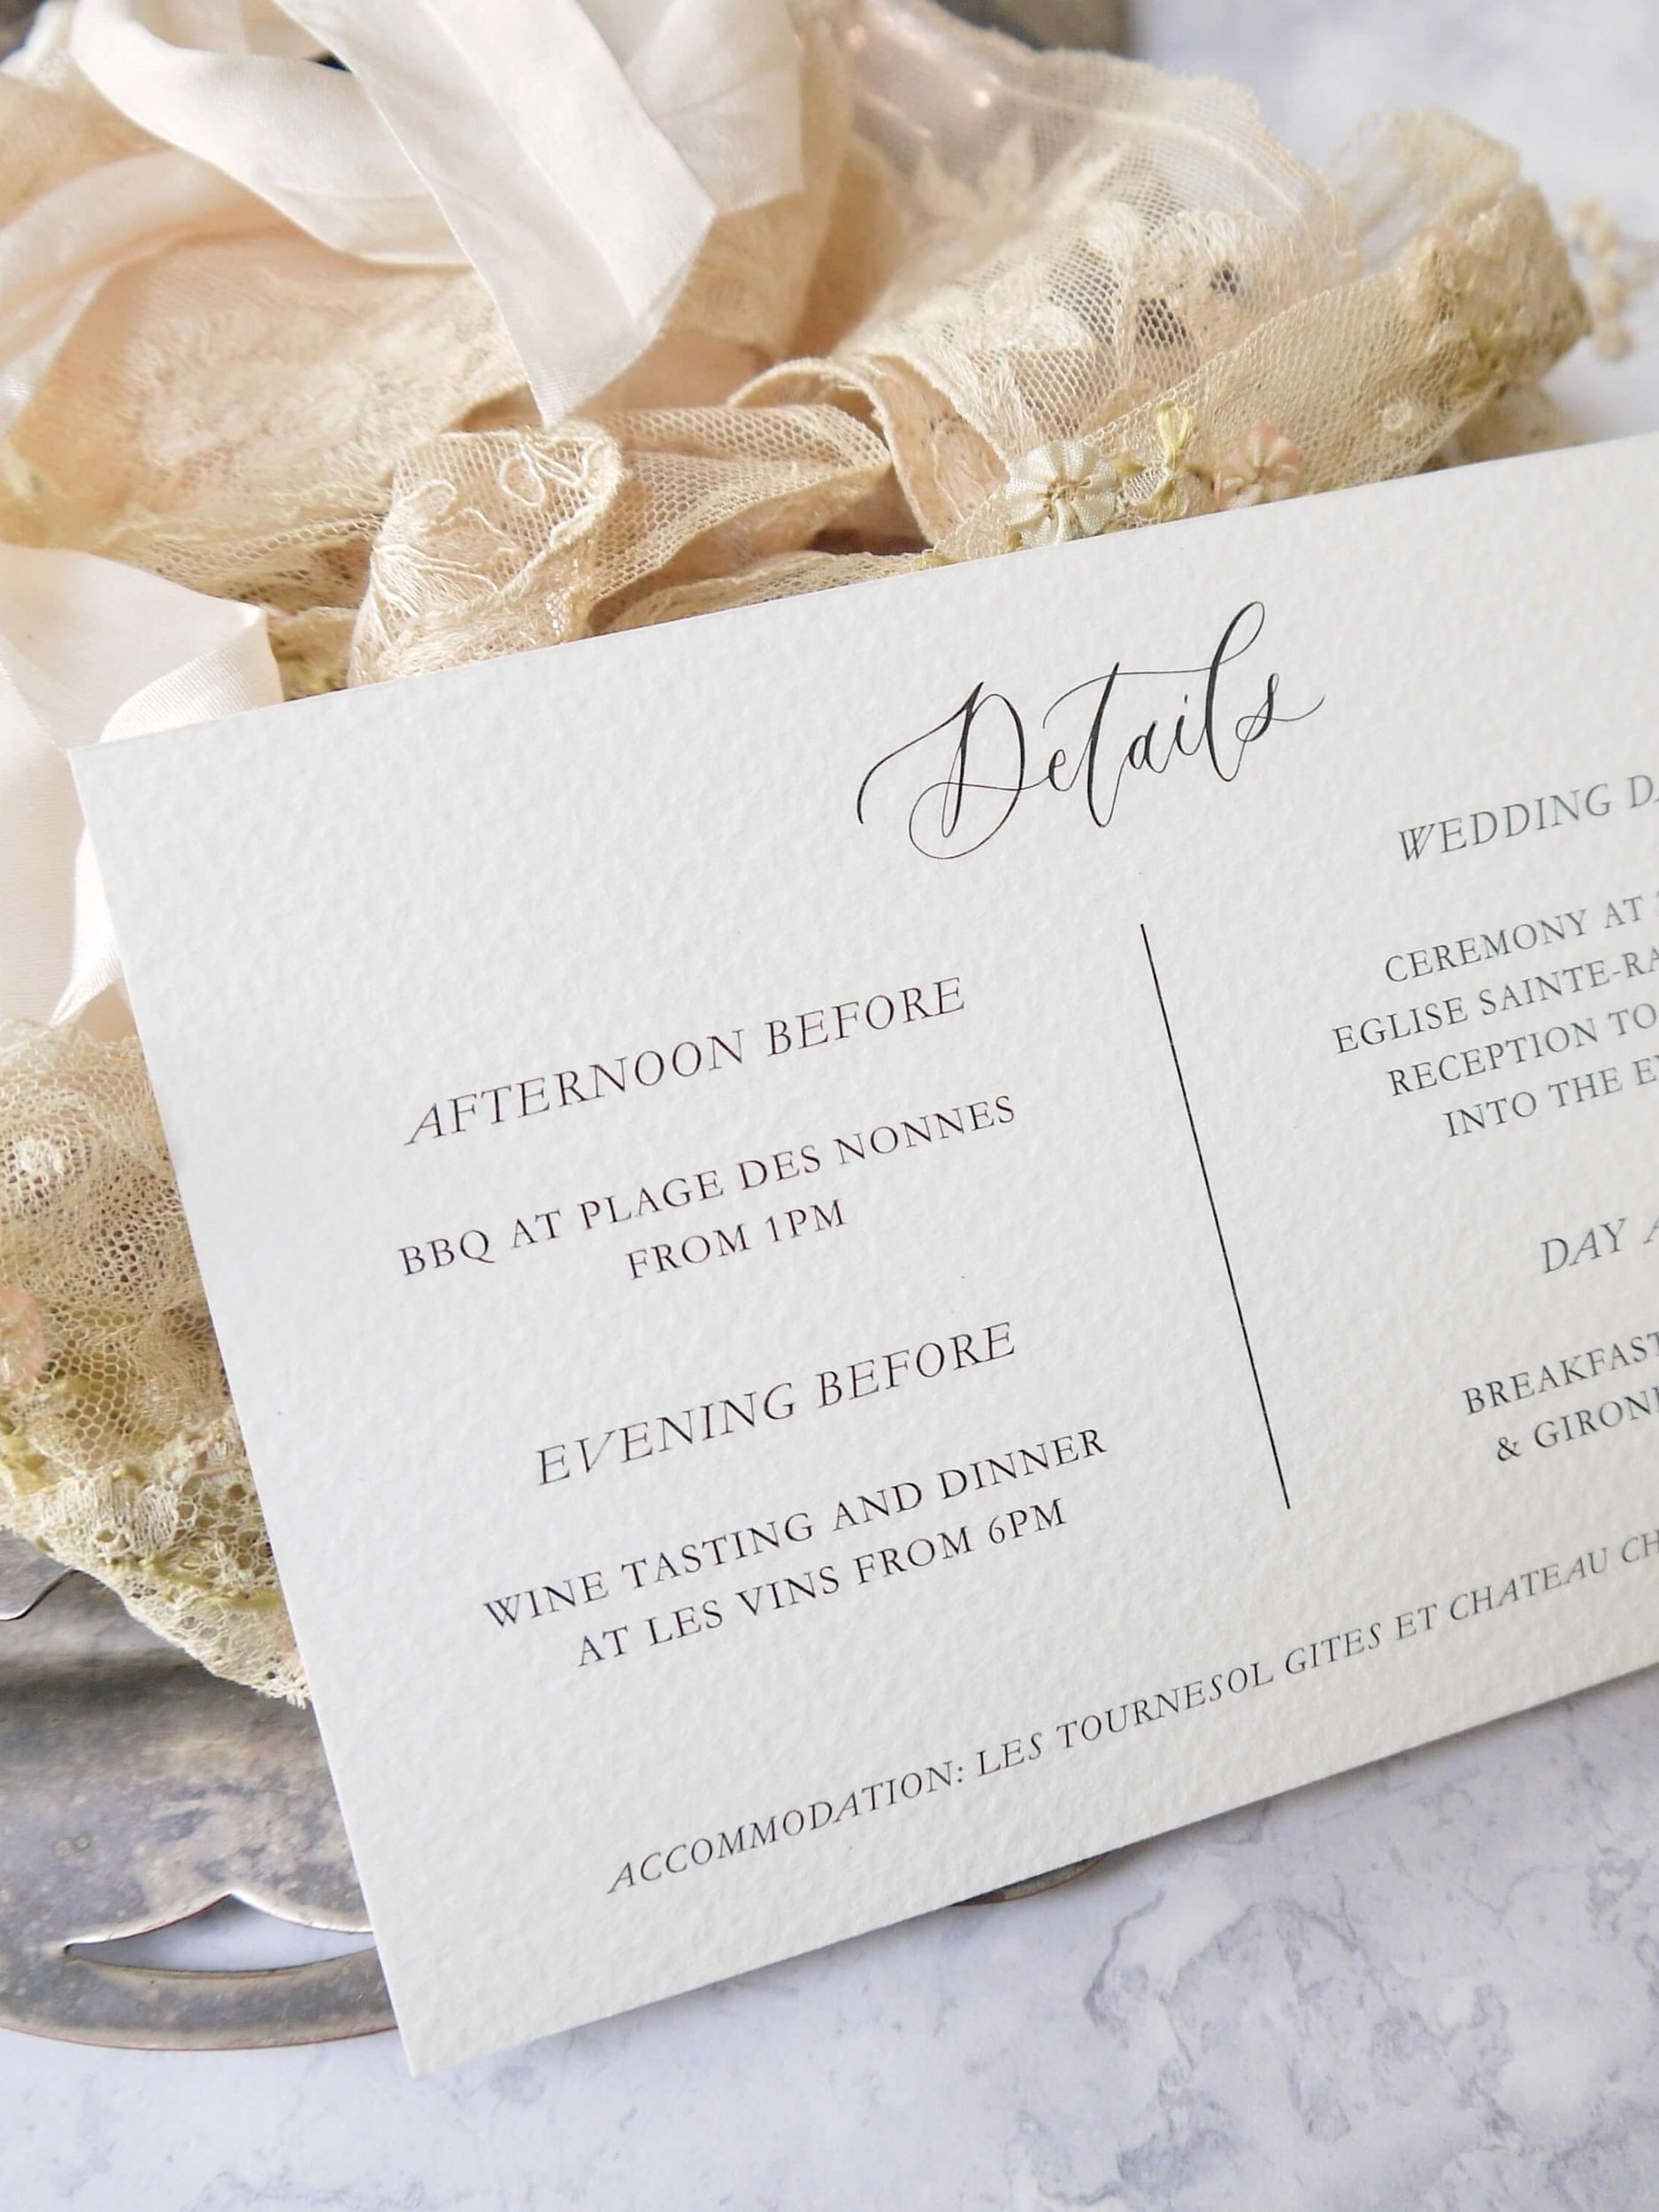 Information card for elegant weddings